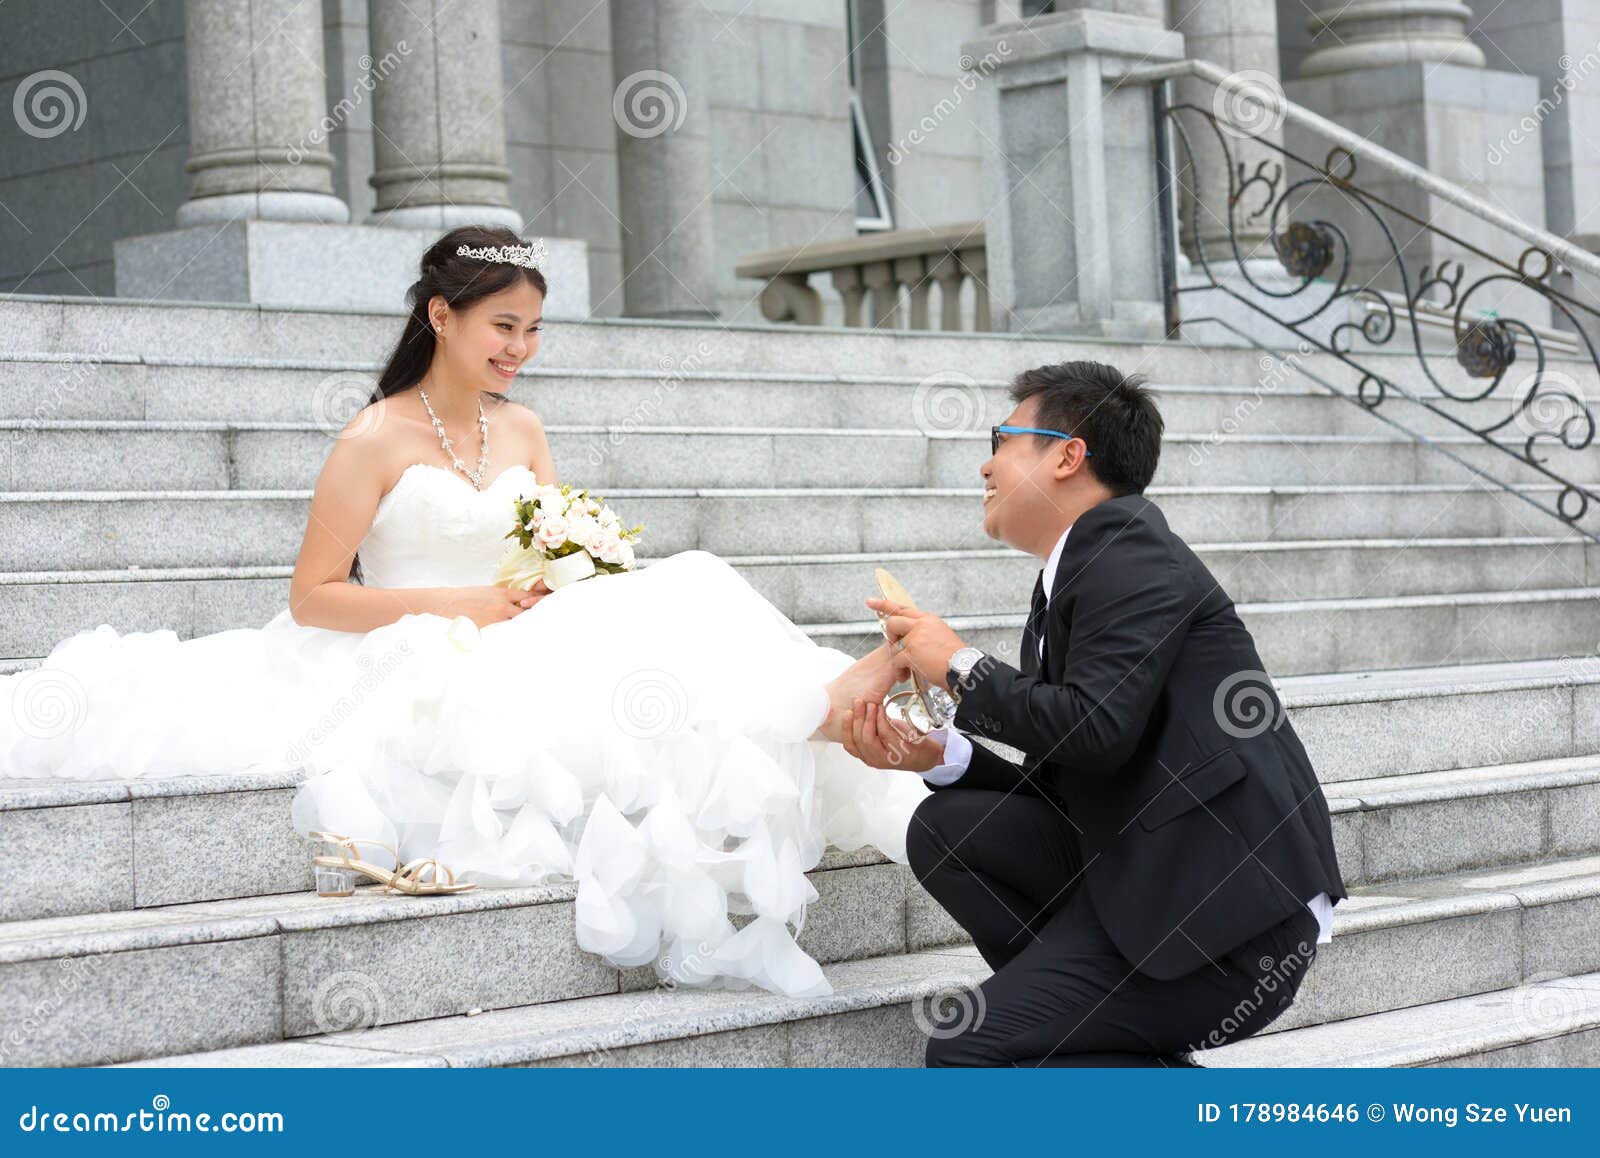 https://thumbs.dreamstime.com/z/lovely-asian-bride-groom-asian-groom-helping-his-bride-to-wear-shoe-178984646.jpg